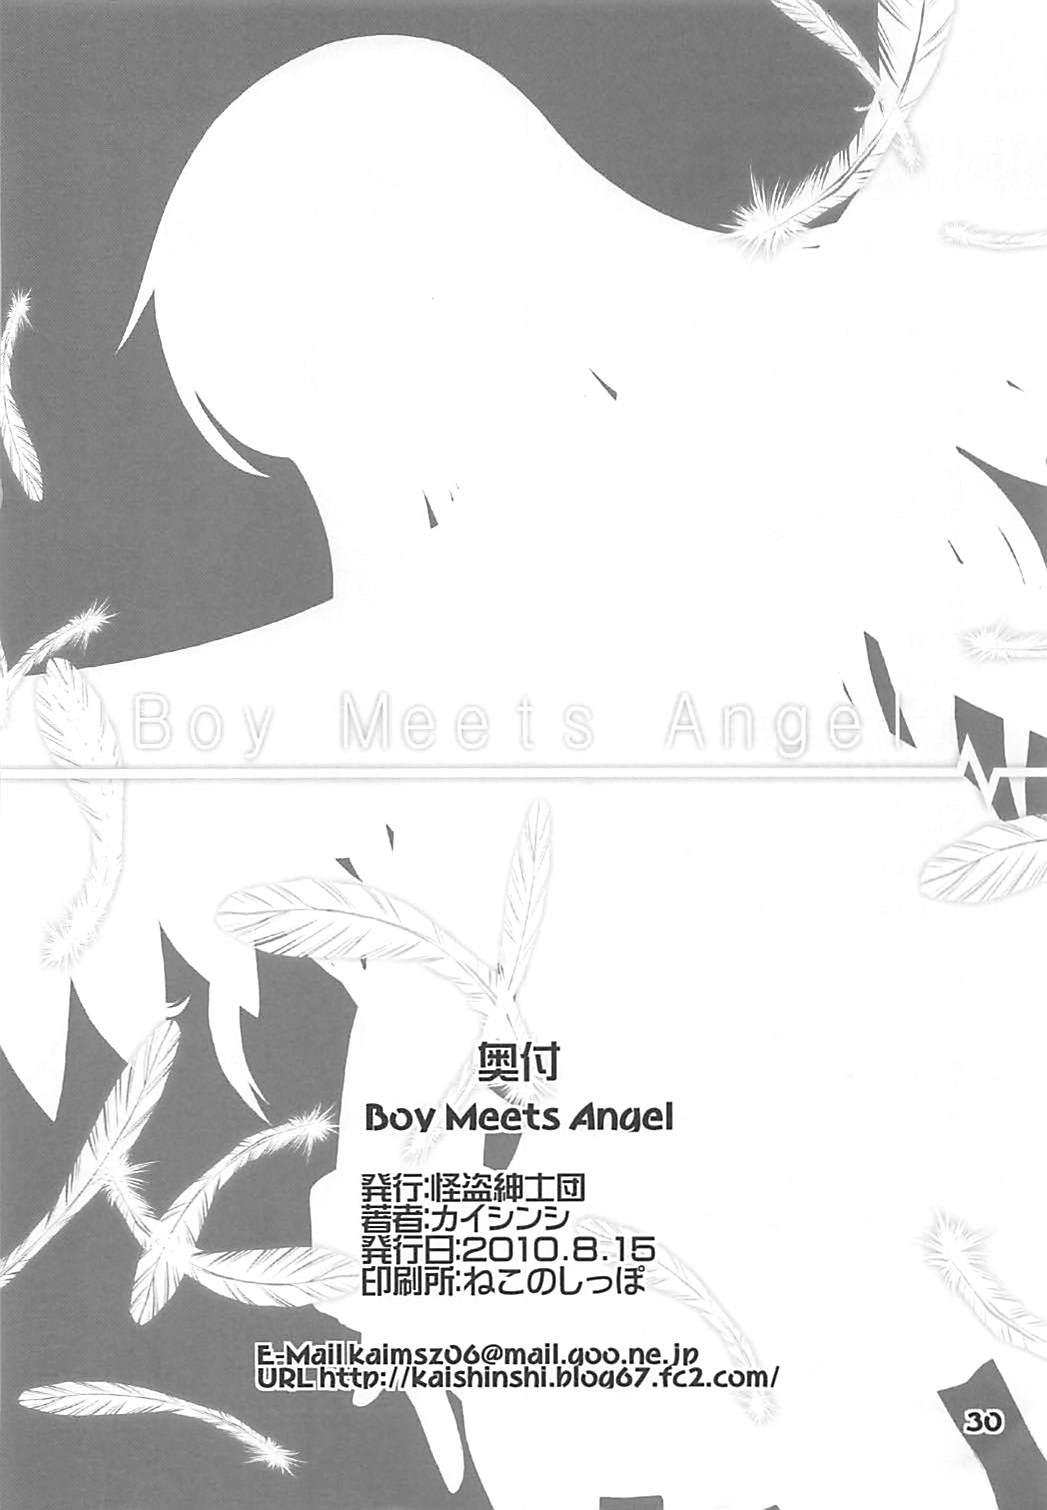 Banho Boy Meets Angel - Angel beats Pov Sex - Page 30